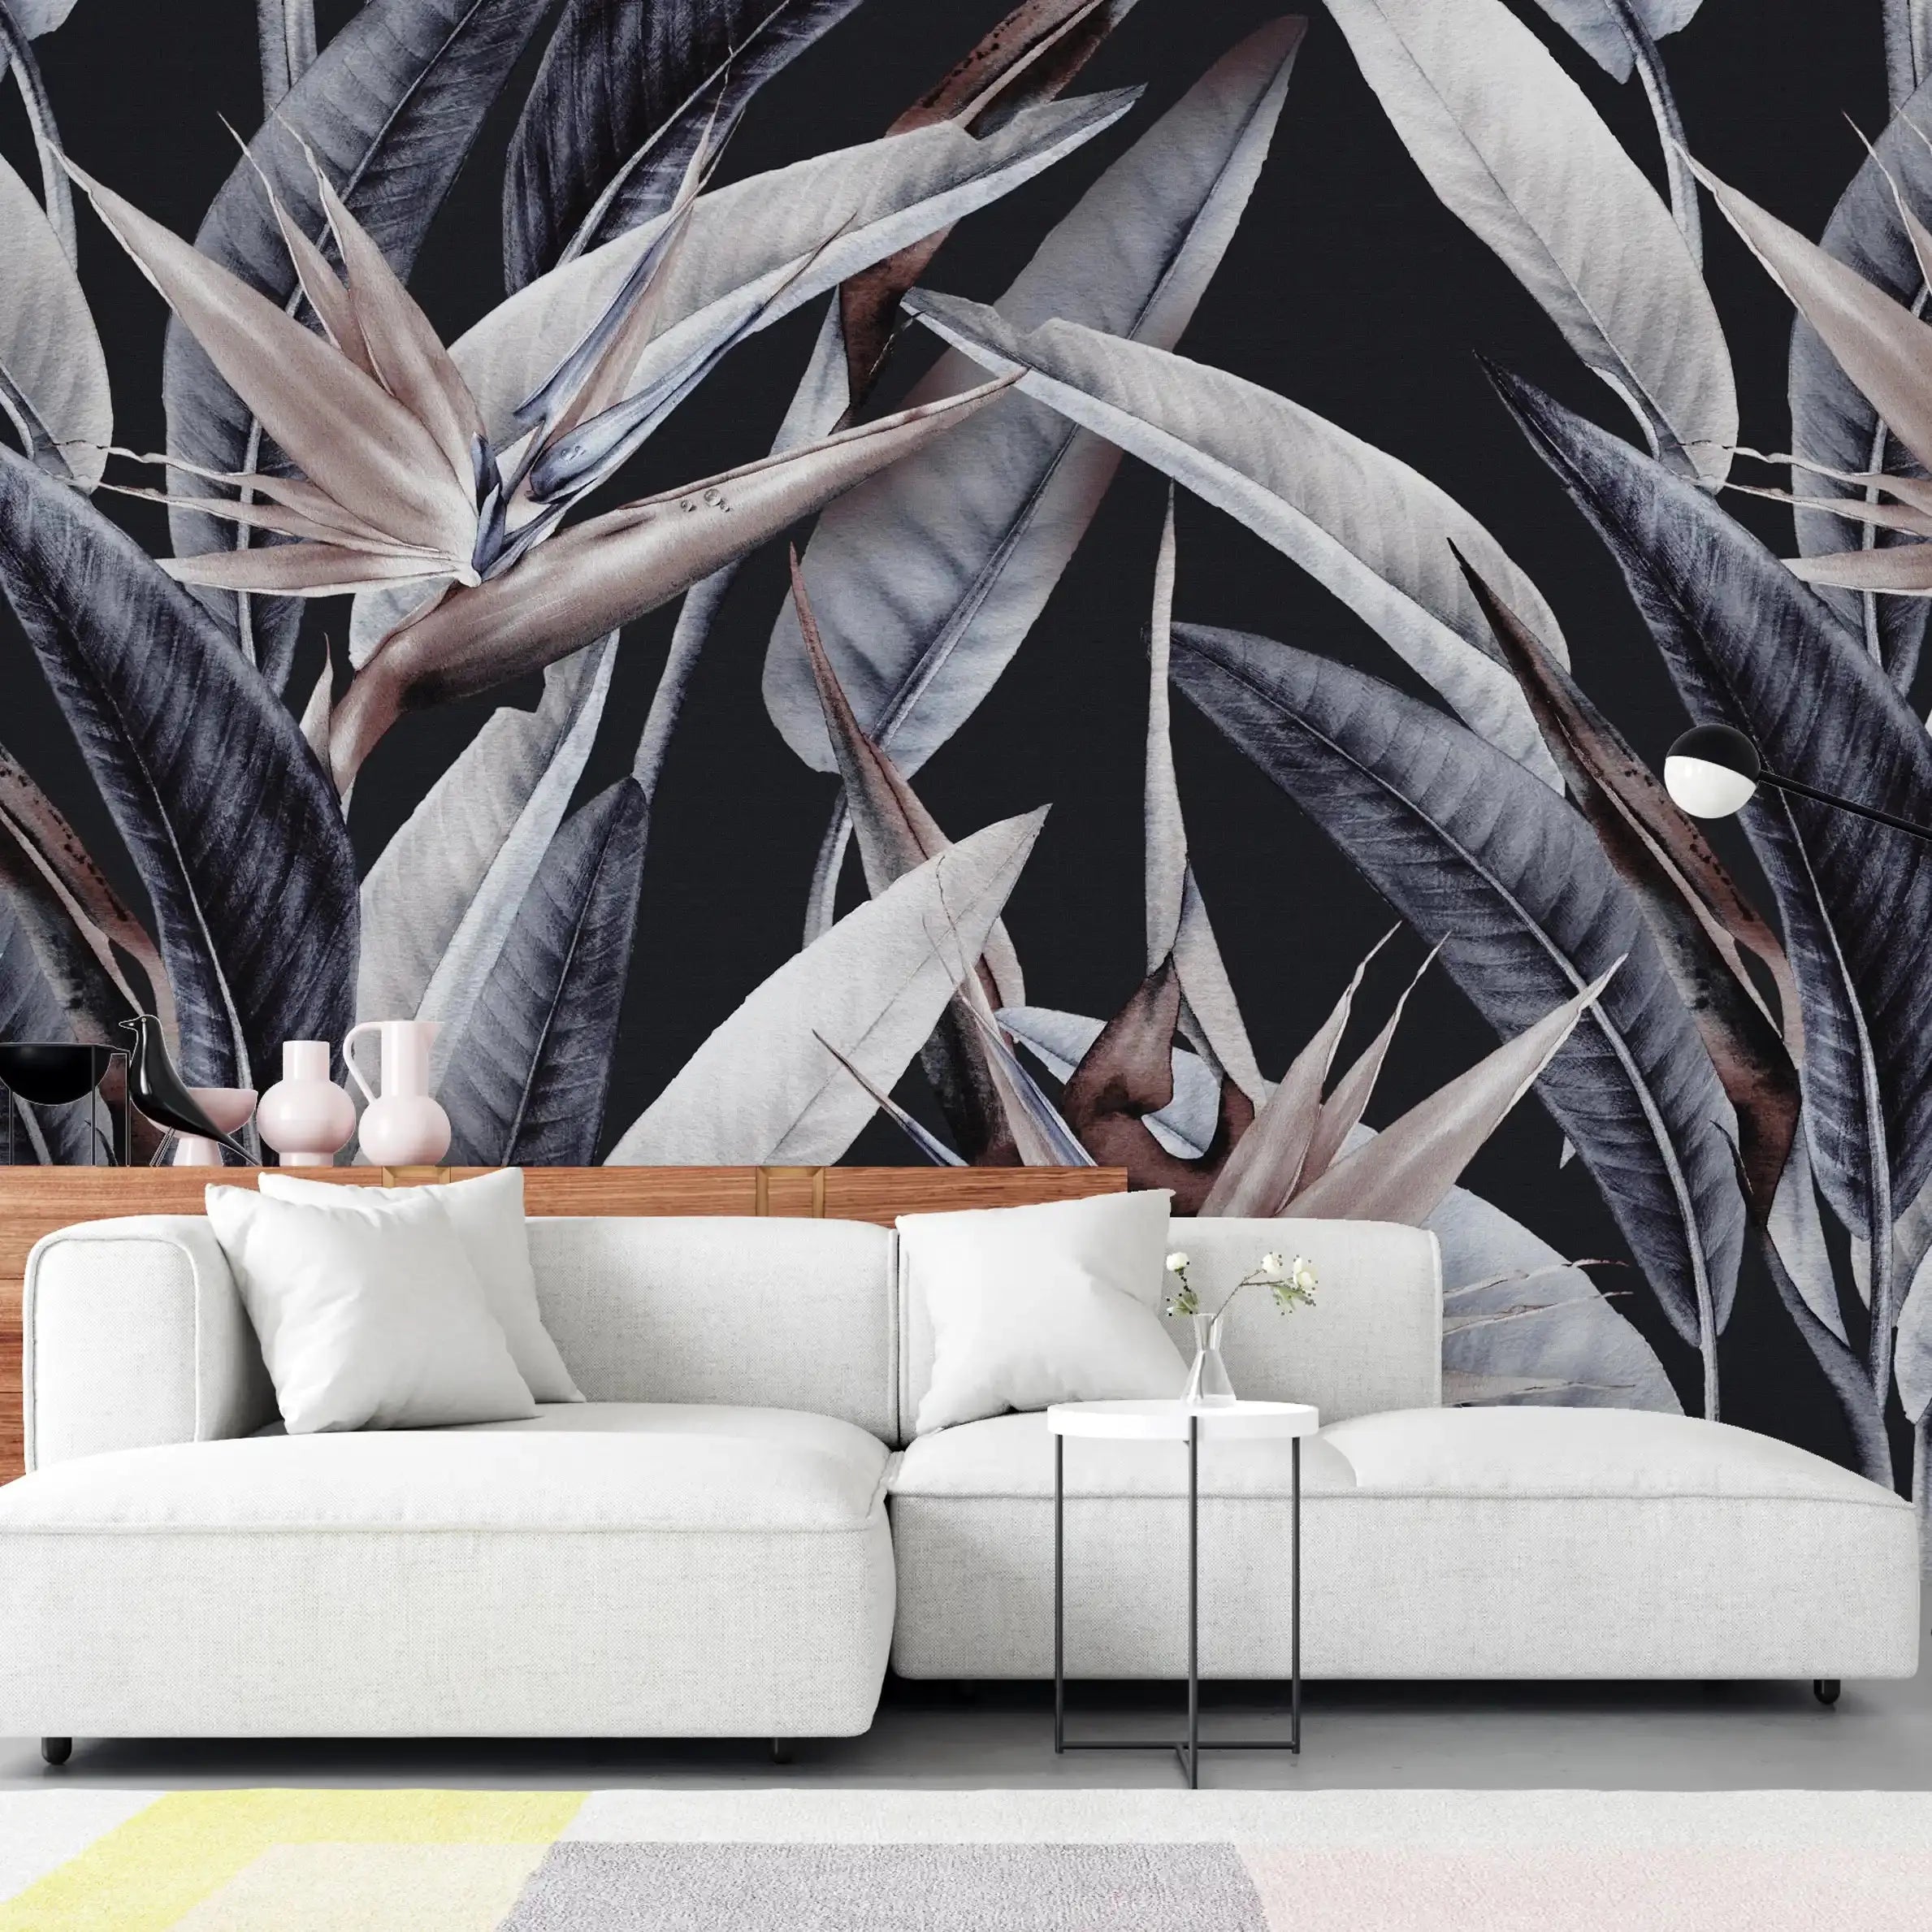 3039-F / Tropical Bird of Paradise Peel and Stick Wallpaper – Vibrant Botanical Design Wall Decor - Artevella